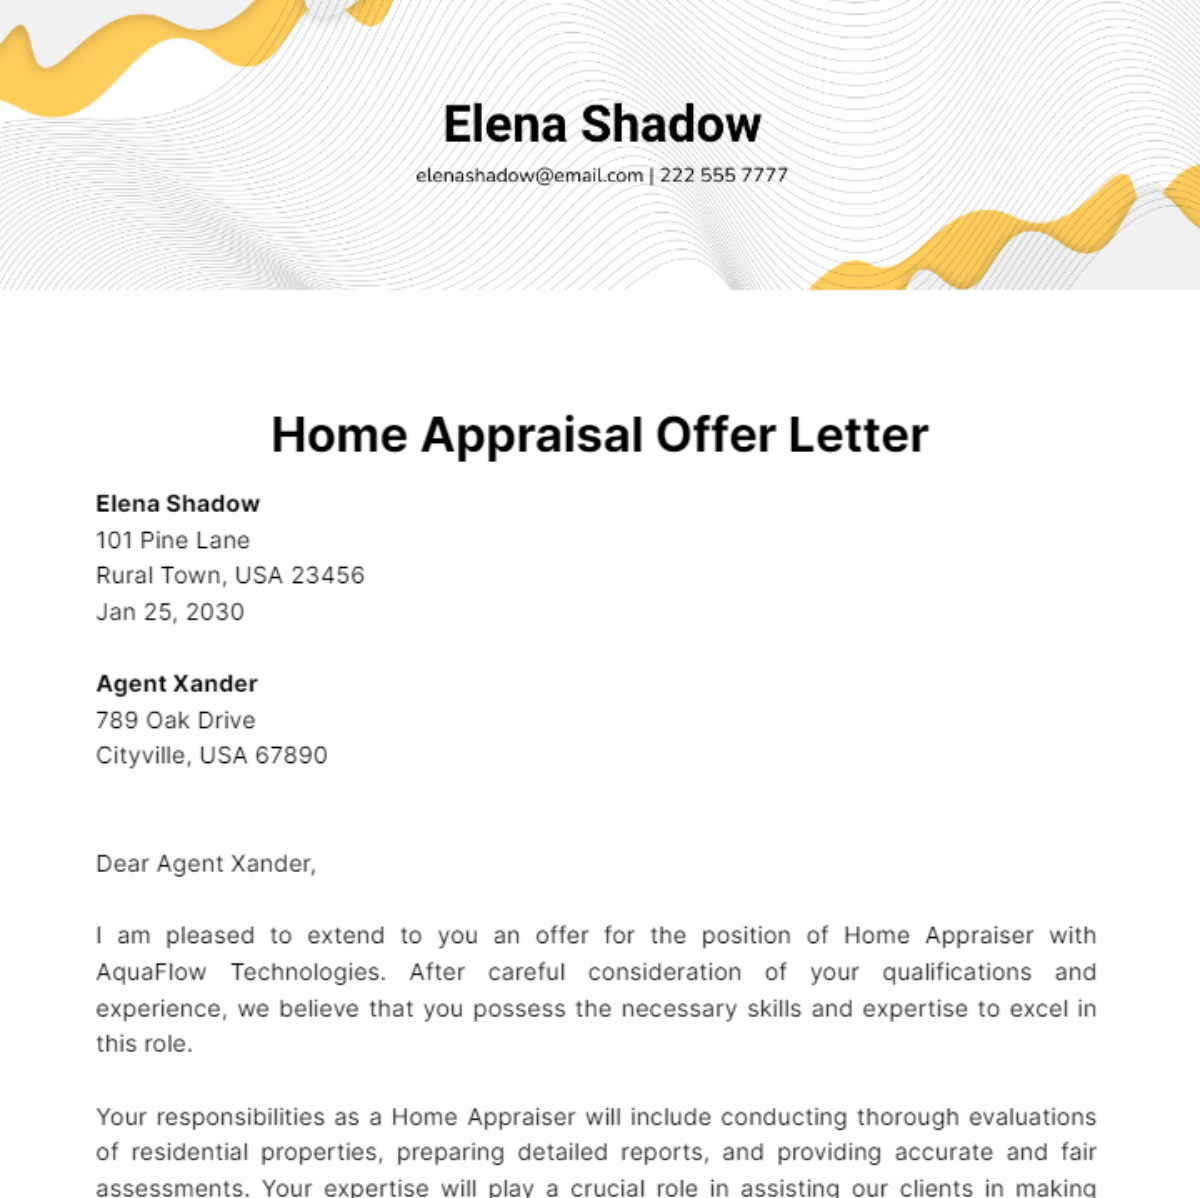 Home Appraisal Offer Letter Template